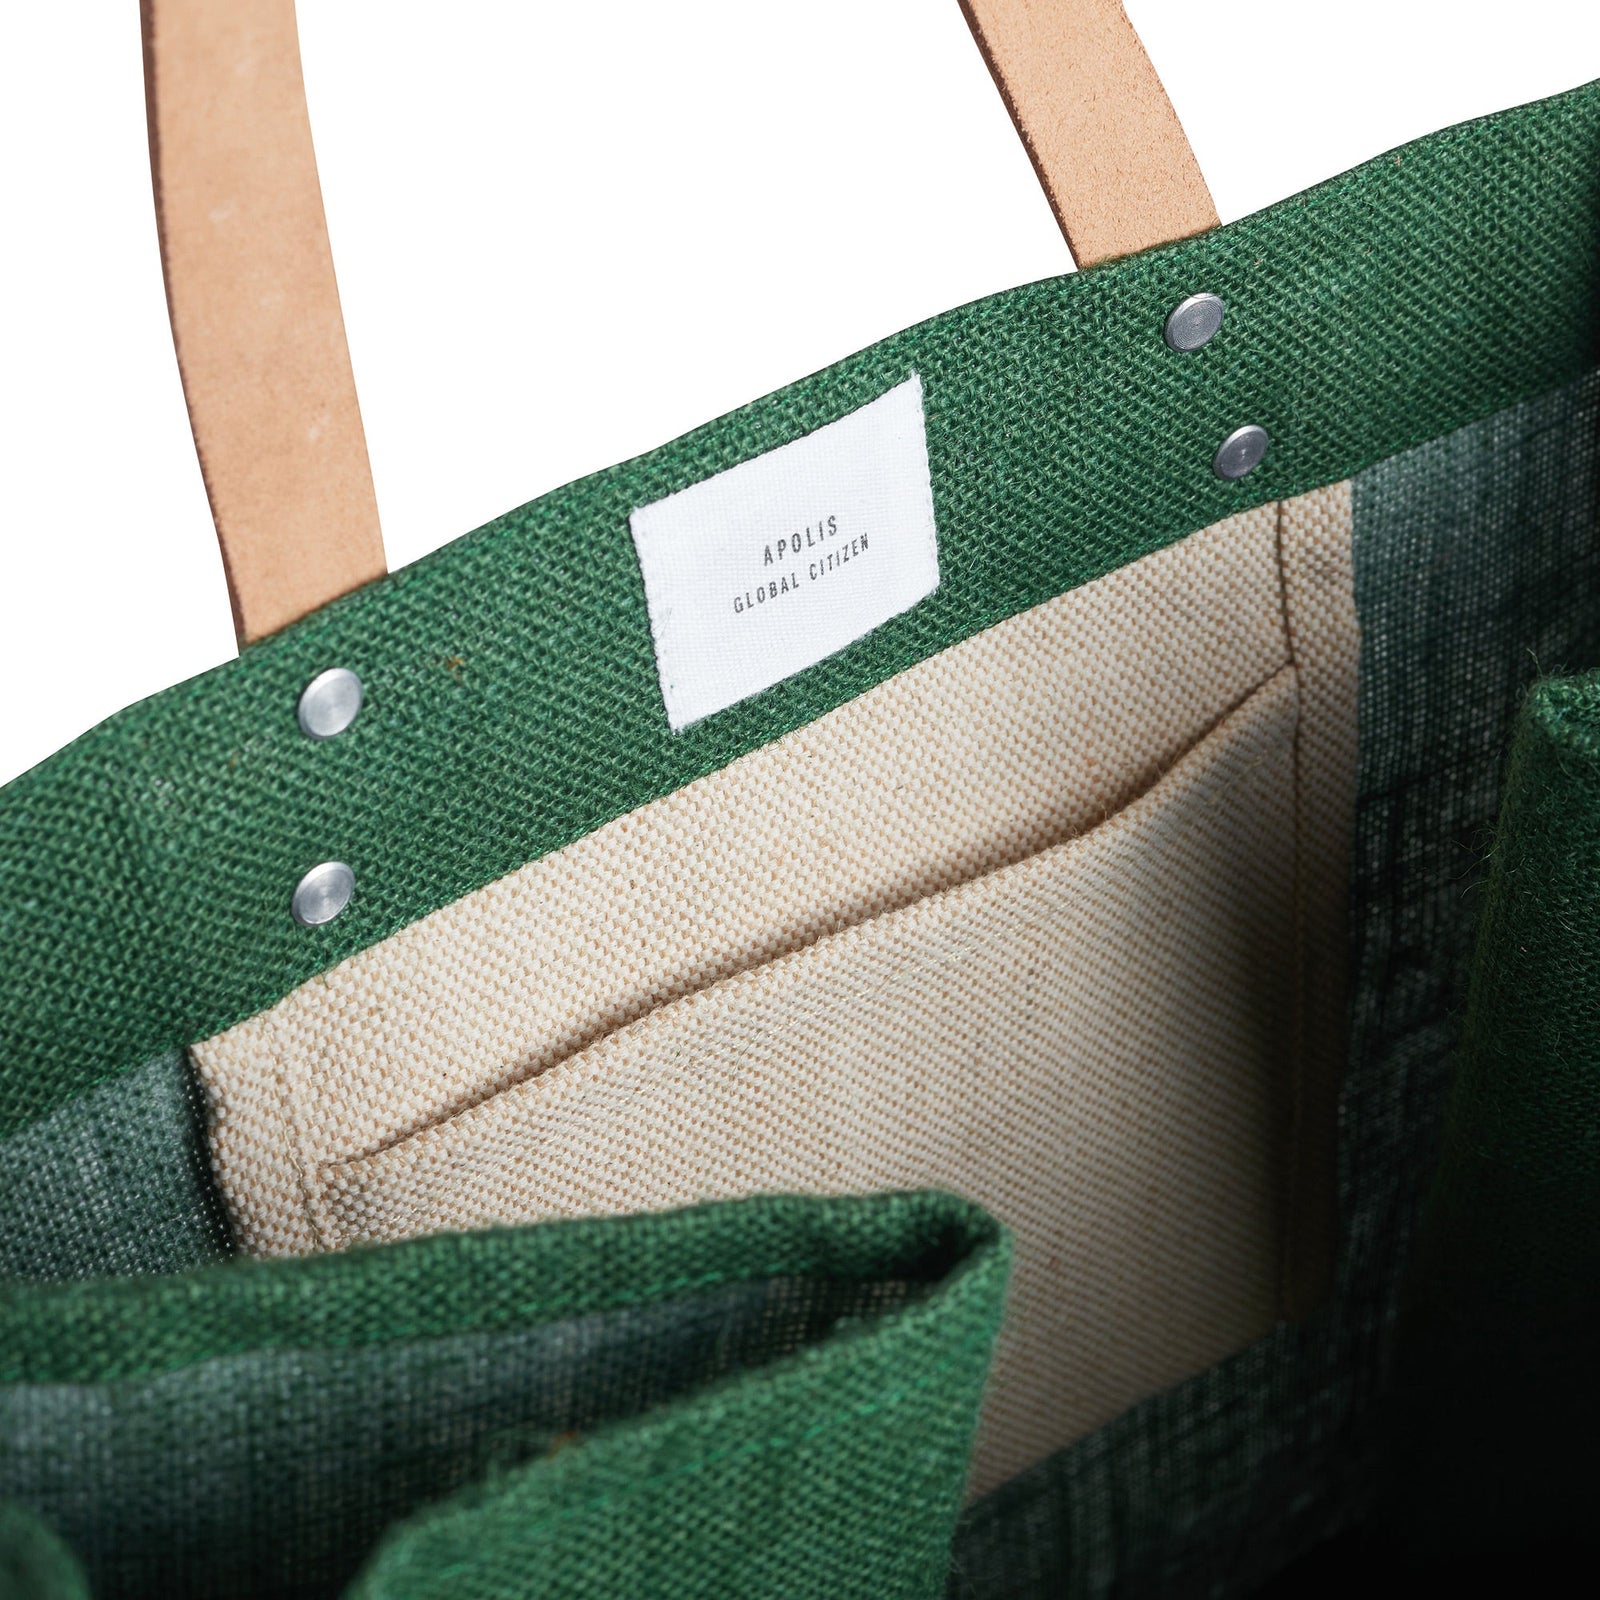 Customized Market Bag in Field Green - Wholesale